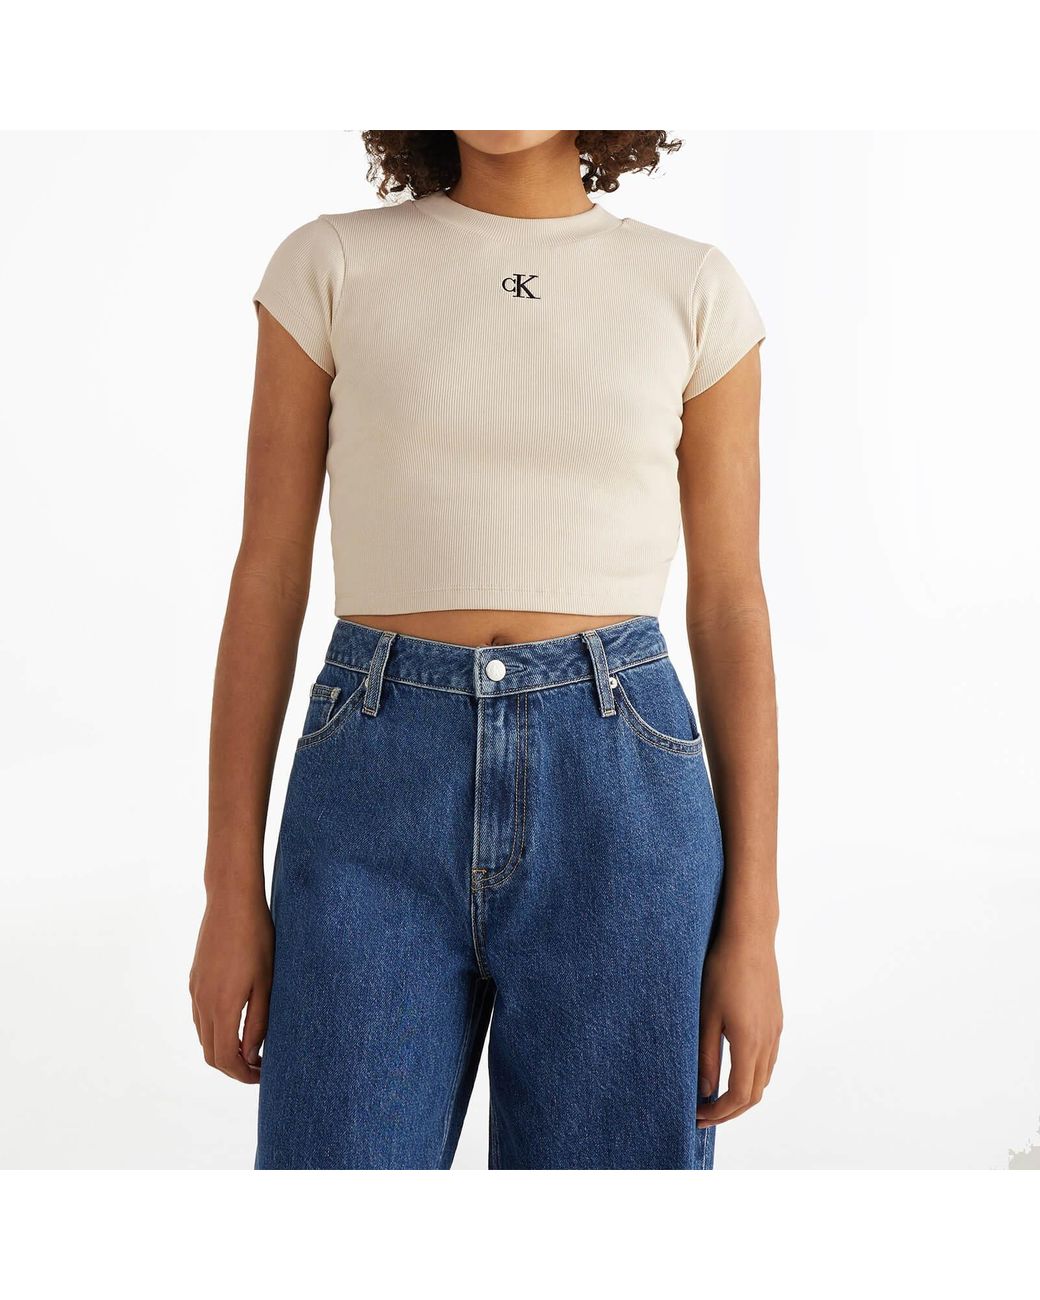 Calvin Klein Jeans Crop Top